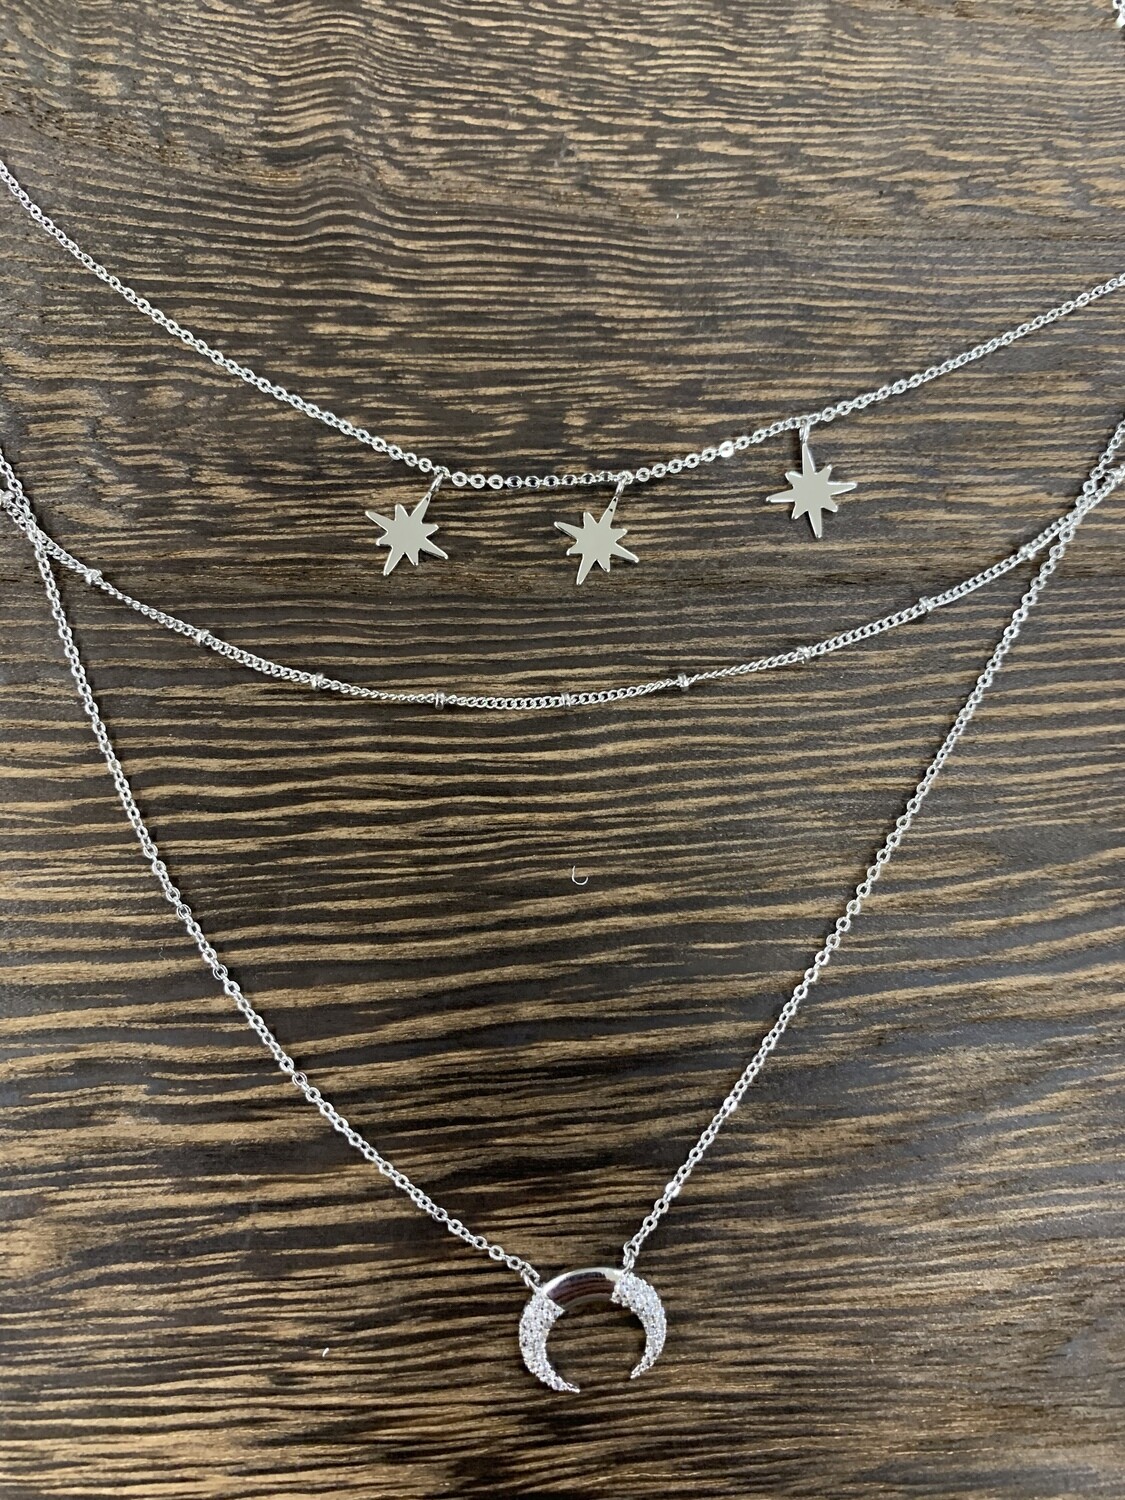 Triple Layer Galaxy Silver Necklace